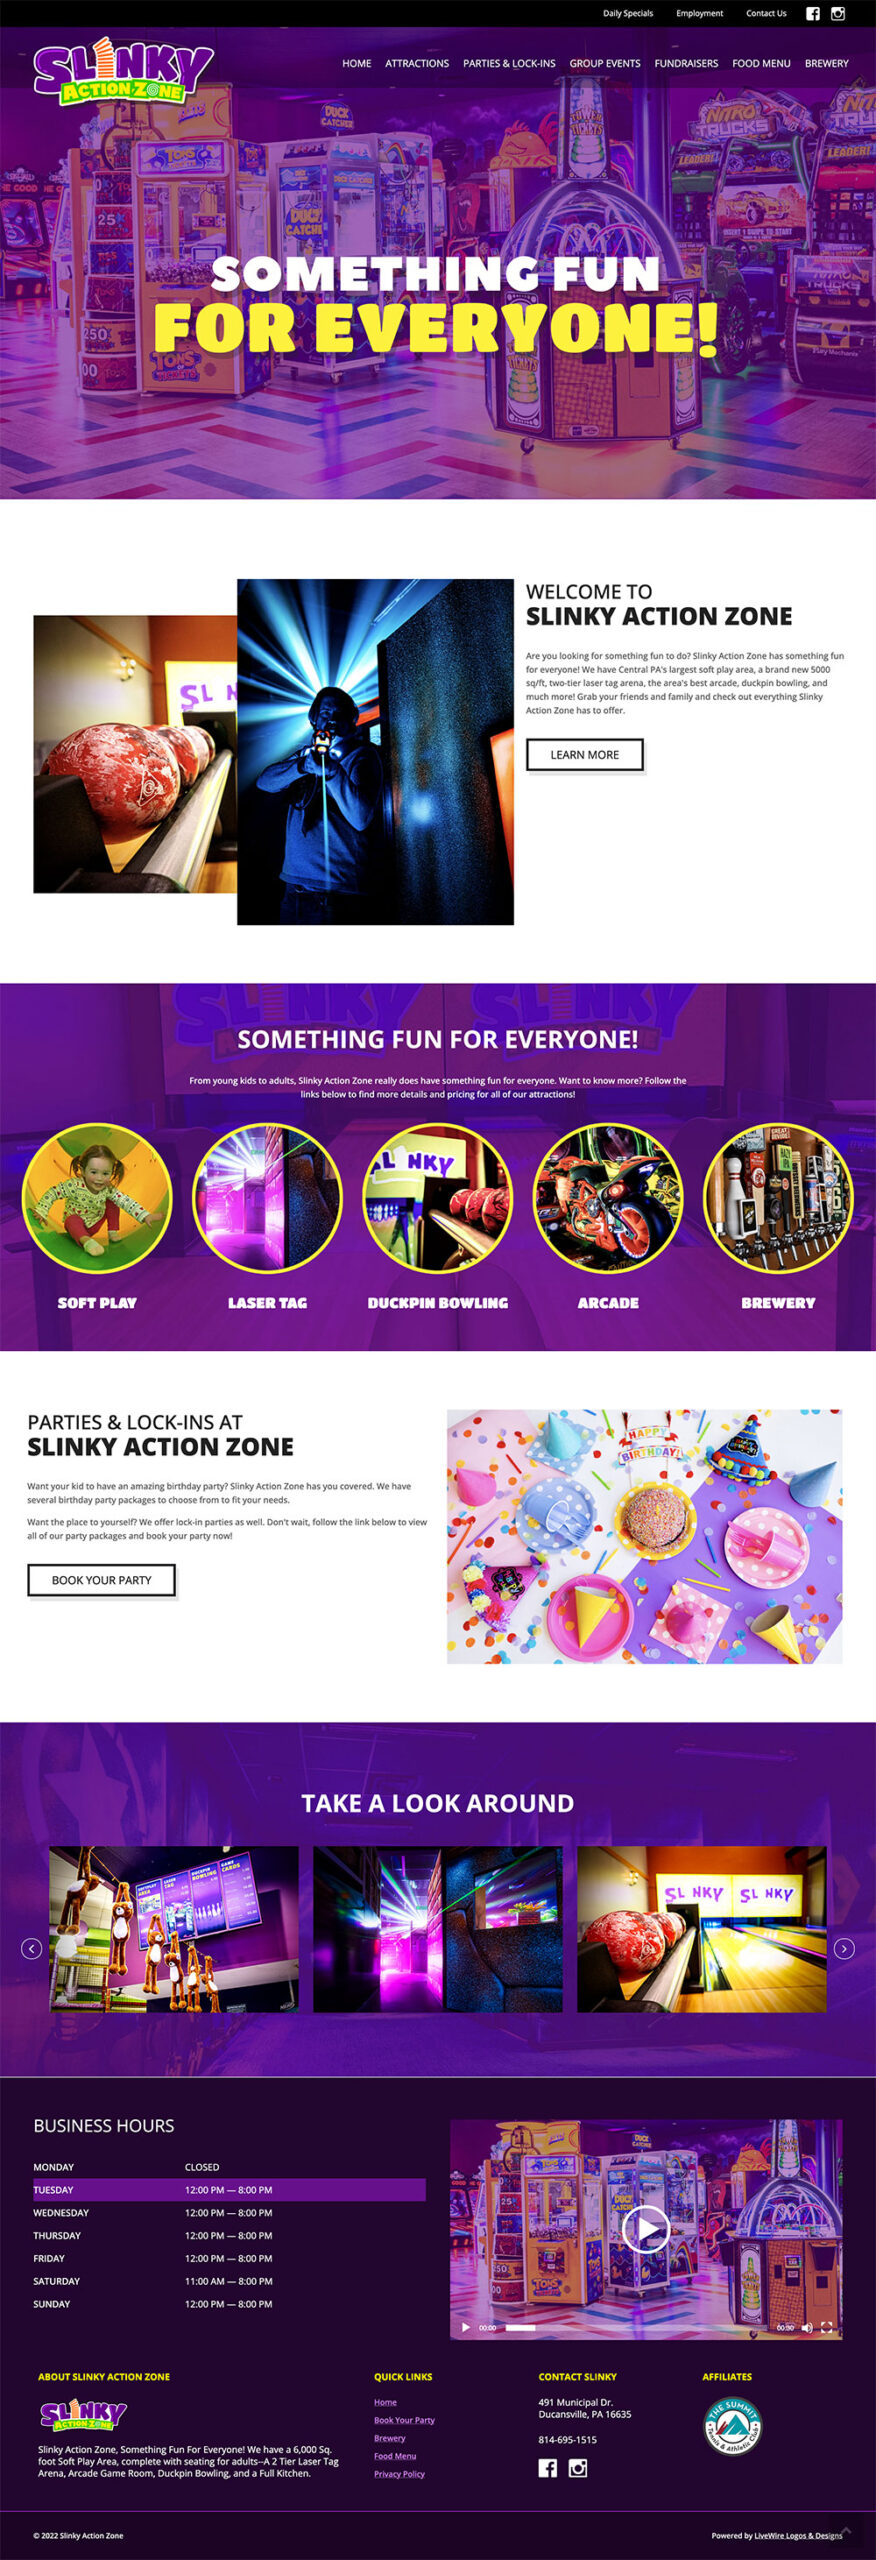 Slinky Action Zone website